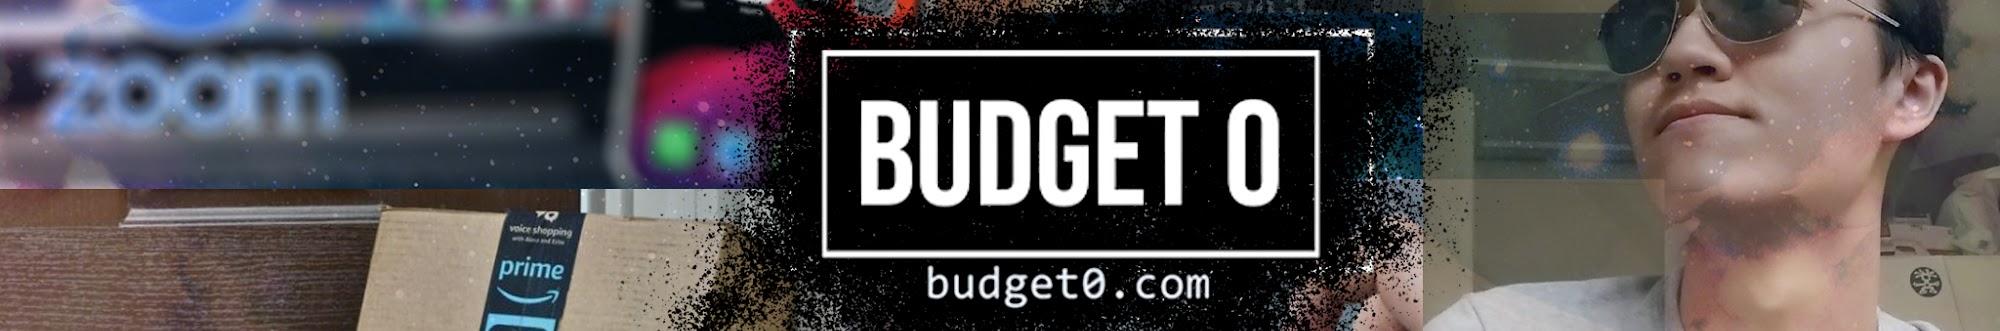 Budget 0